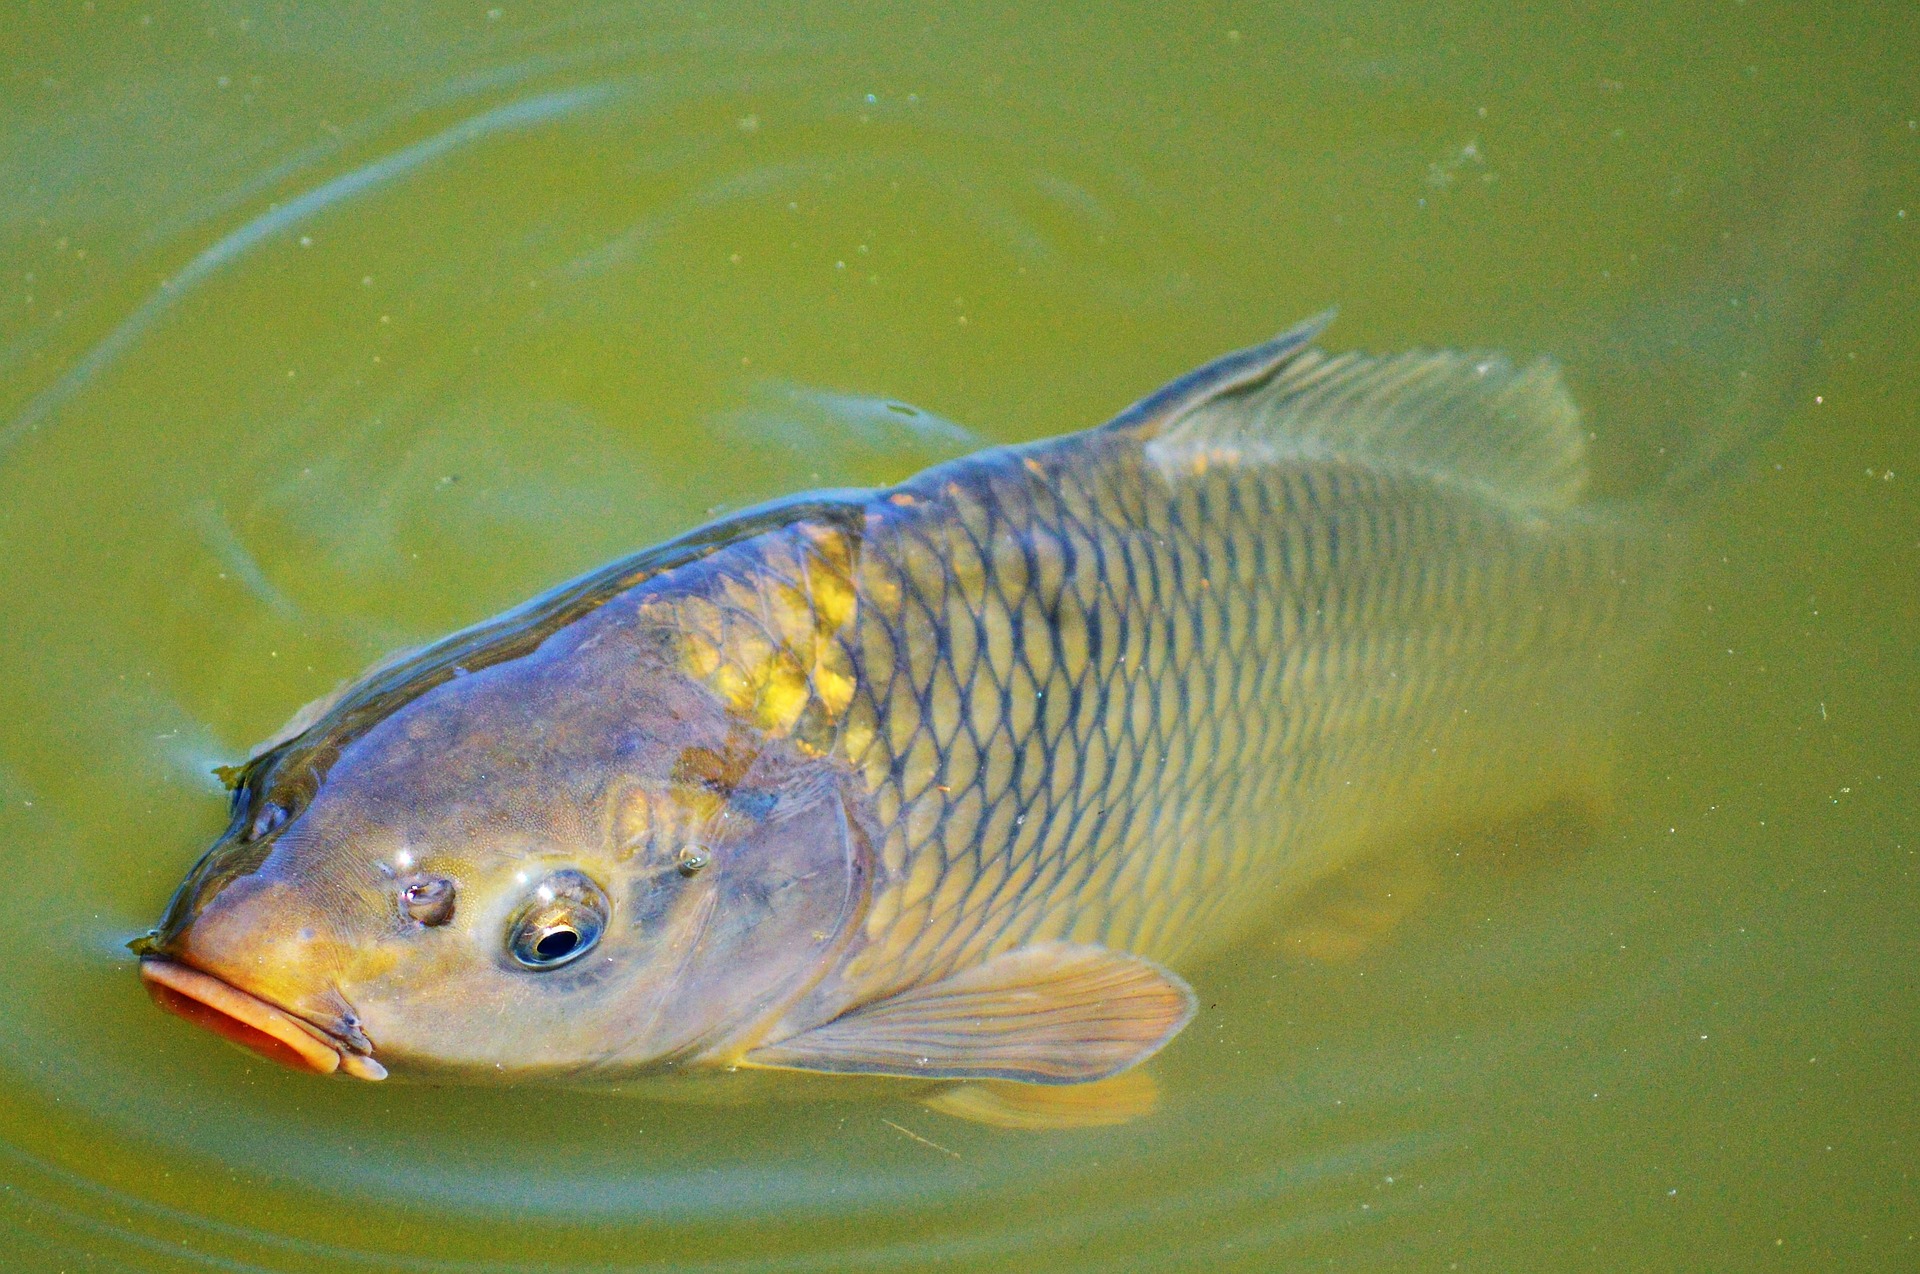 A carp fish in a pond